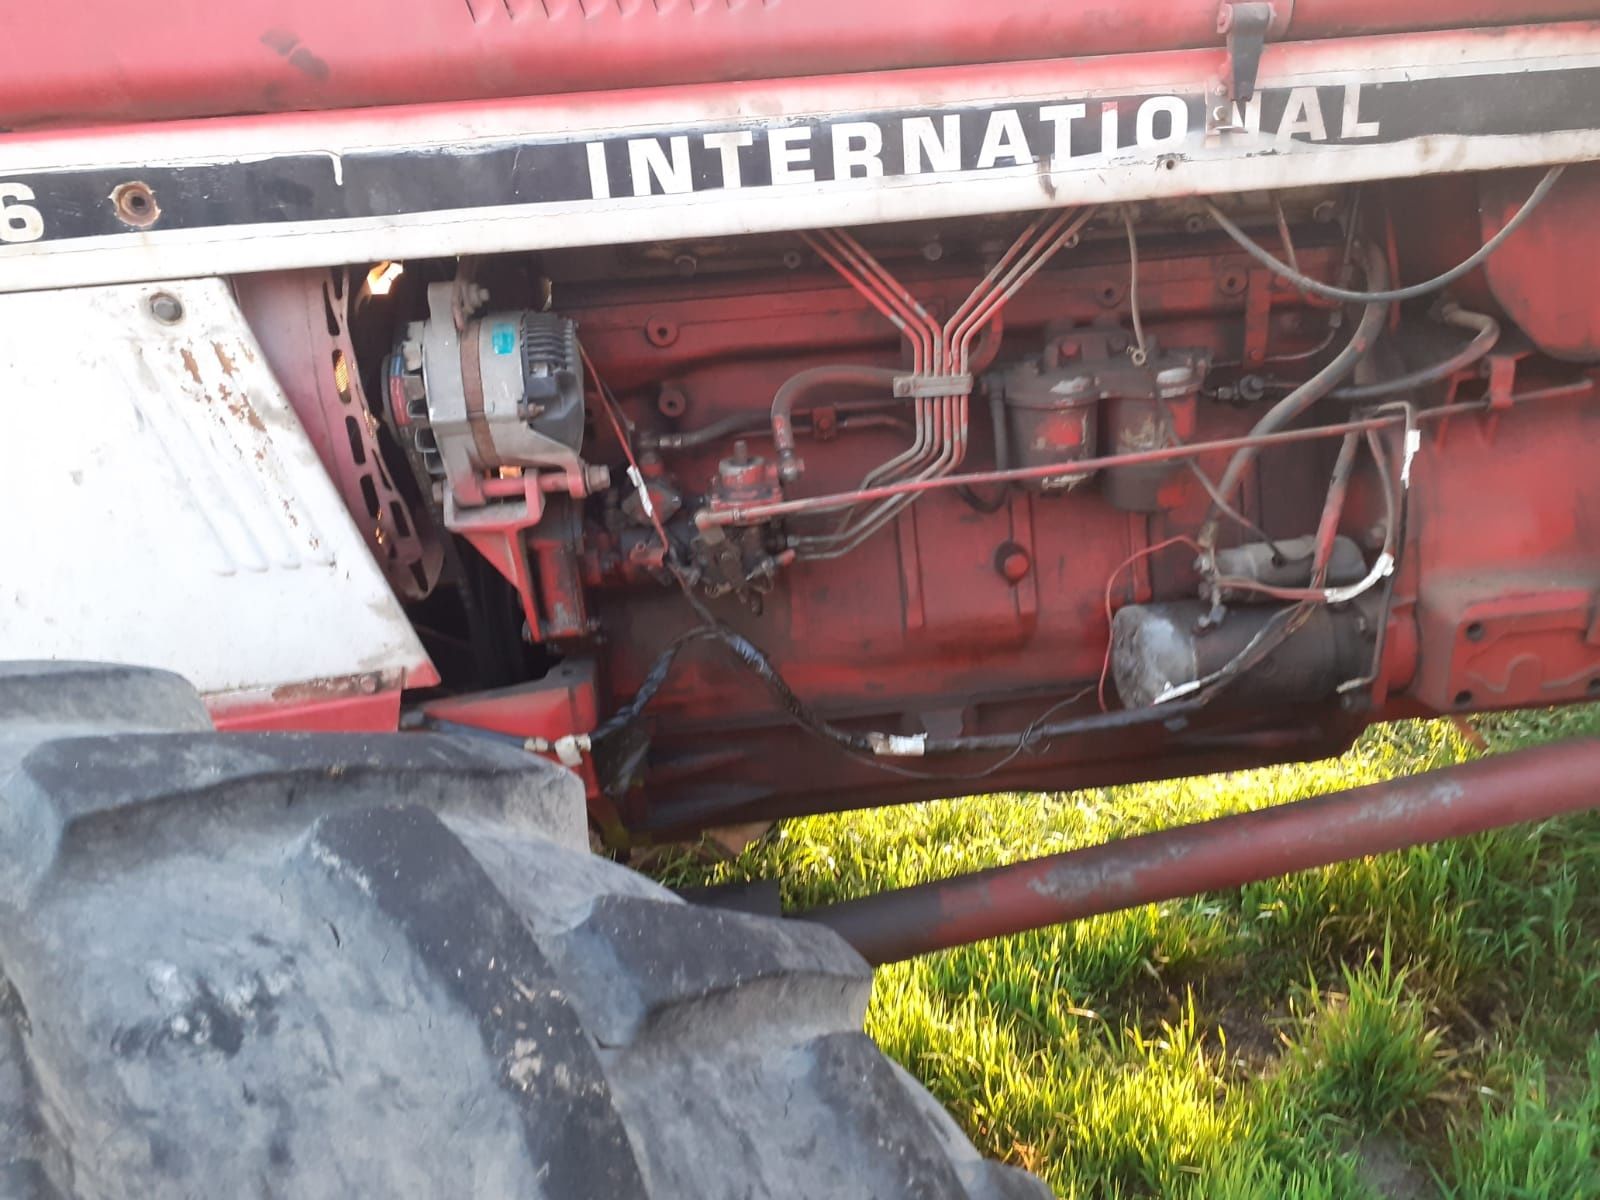 Tractor internațional 1046 cu turbina